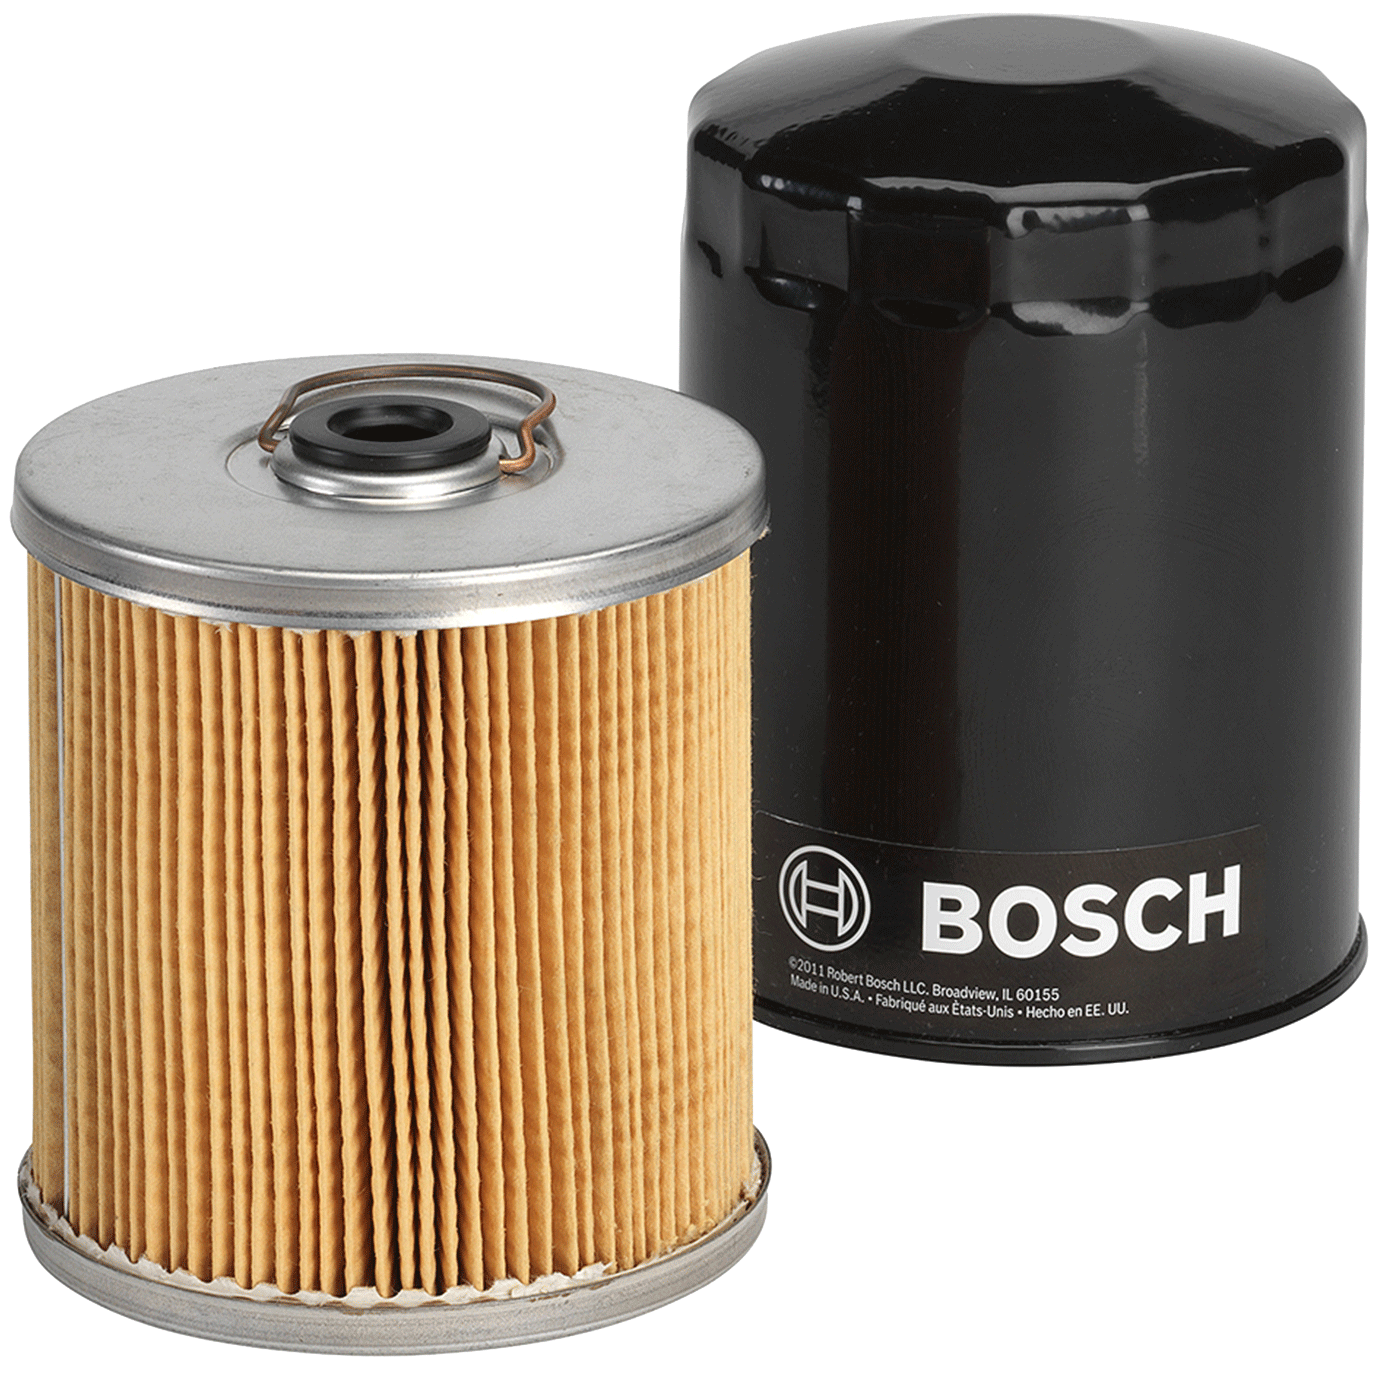 Workshop Oil Filters | Bosch Auto Parts